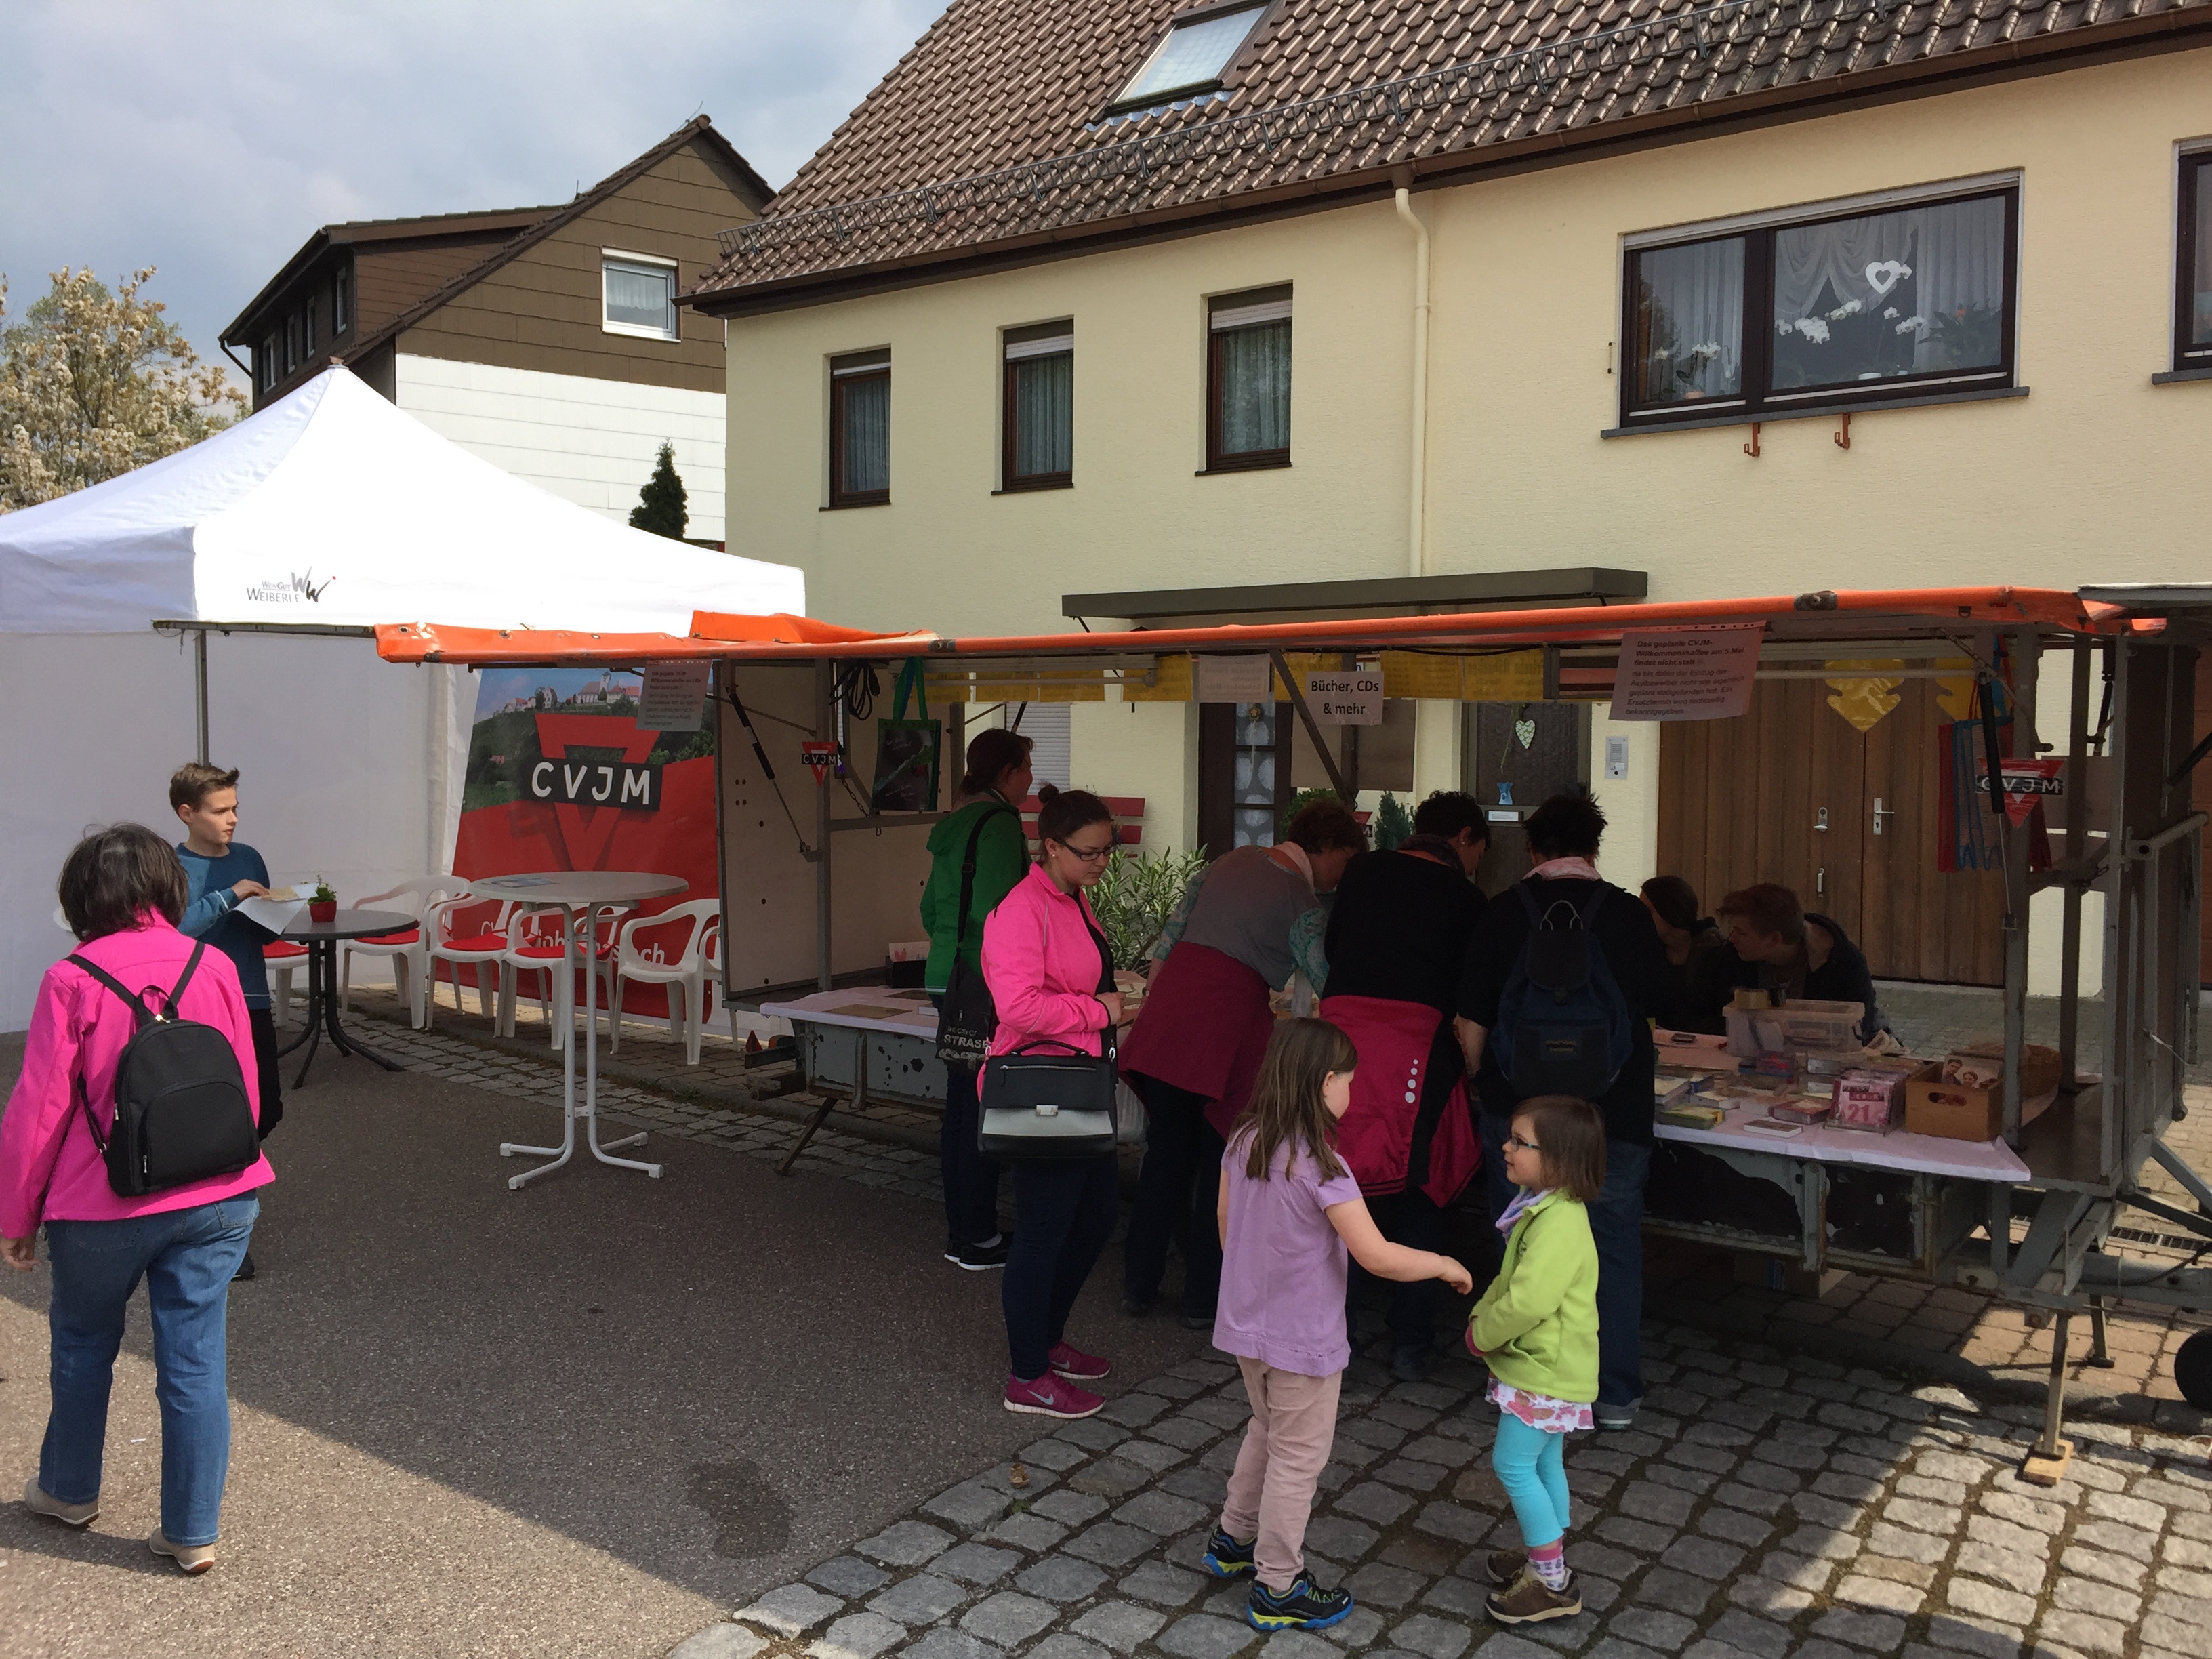 Featured image for “Krämermarkt am 1. Mai in Hohenhaslach”